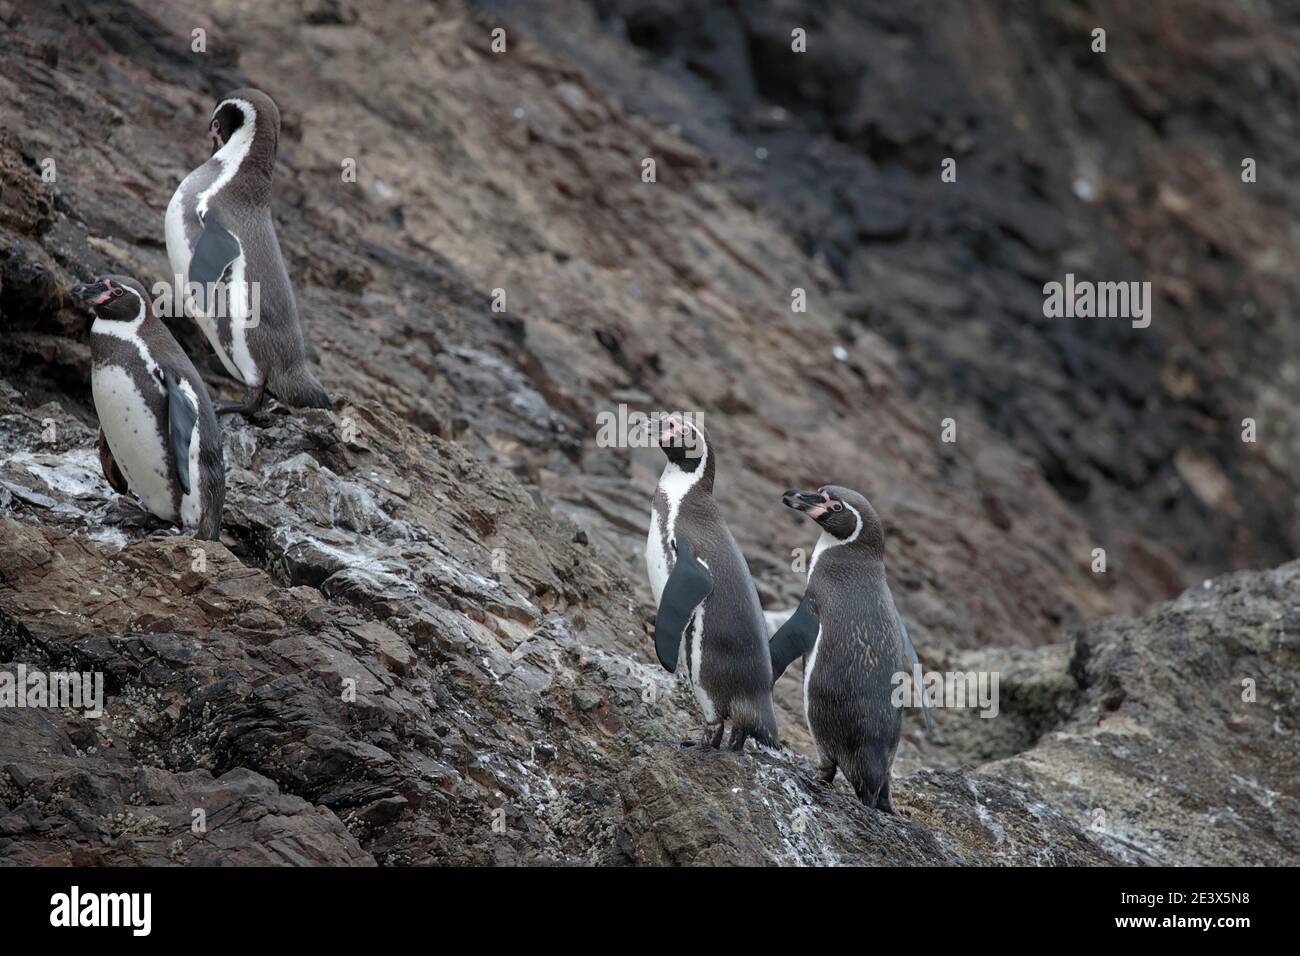 Humboldt Penguins (Spheniscus humboldti), penguin colony at Bahia Punihuil, Chiloe Island, Los Lagos Region, south Chile 11th Jan 2016 Stock Photo